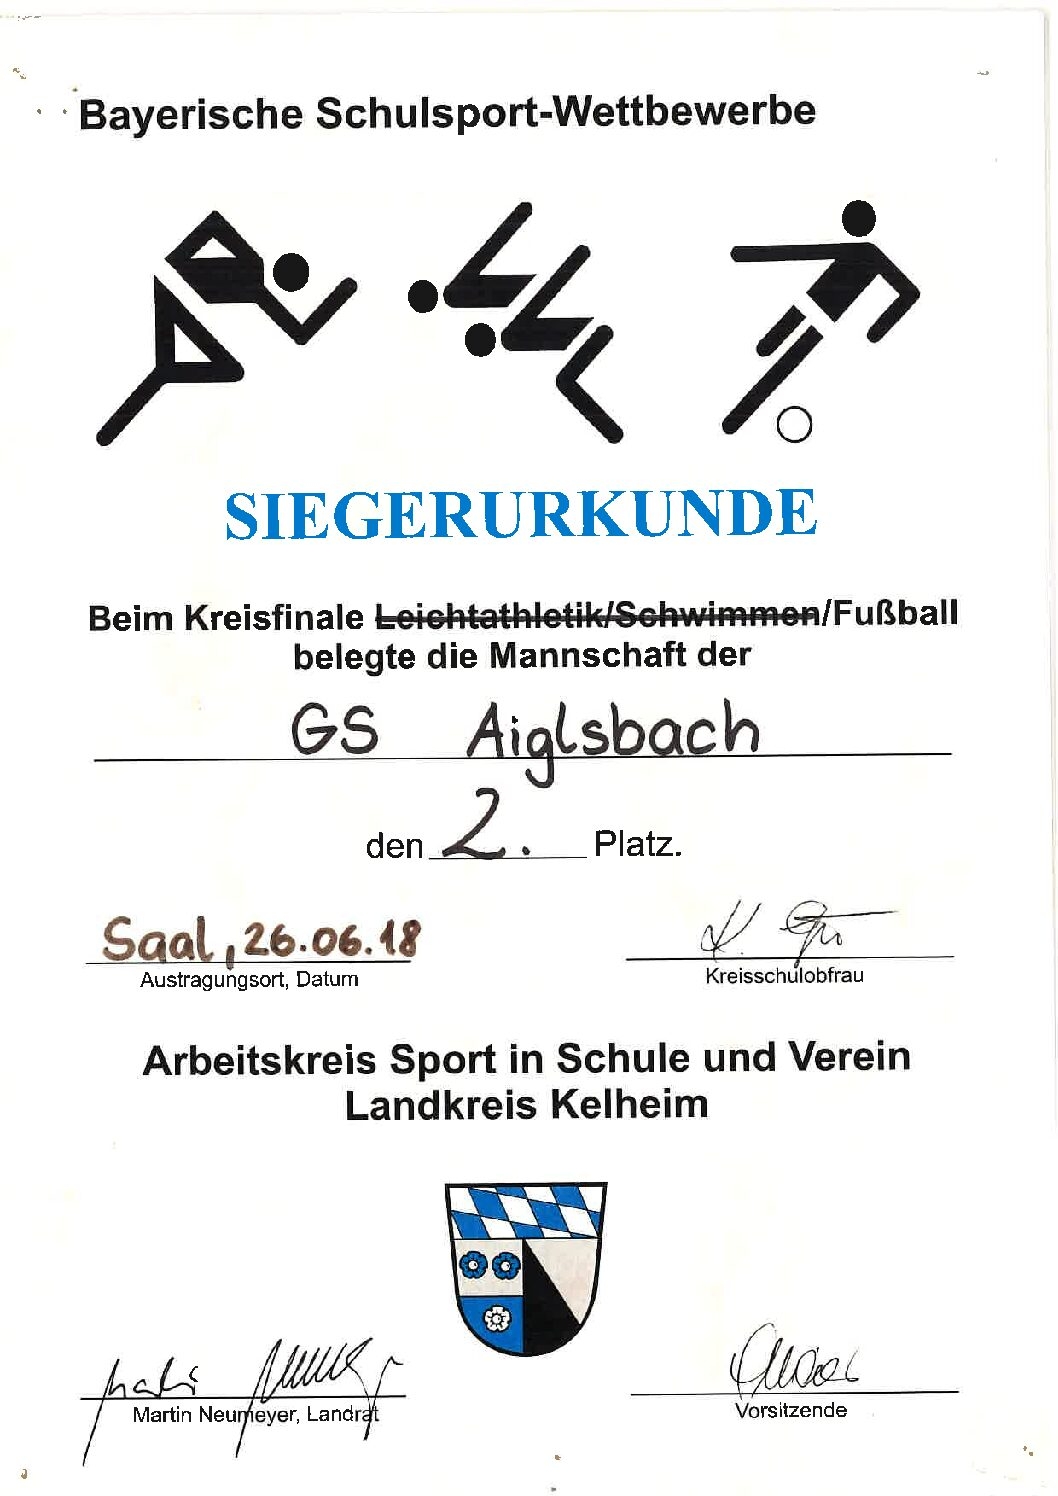 2018-06-26-Urkunde-Kreisfinale-Fussball-pdf